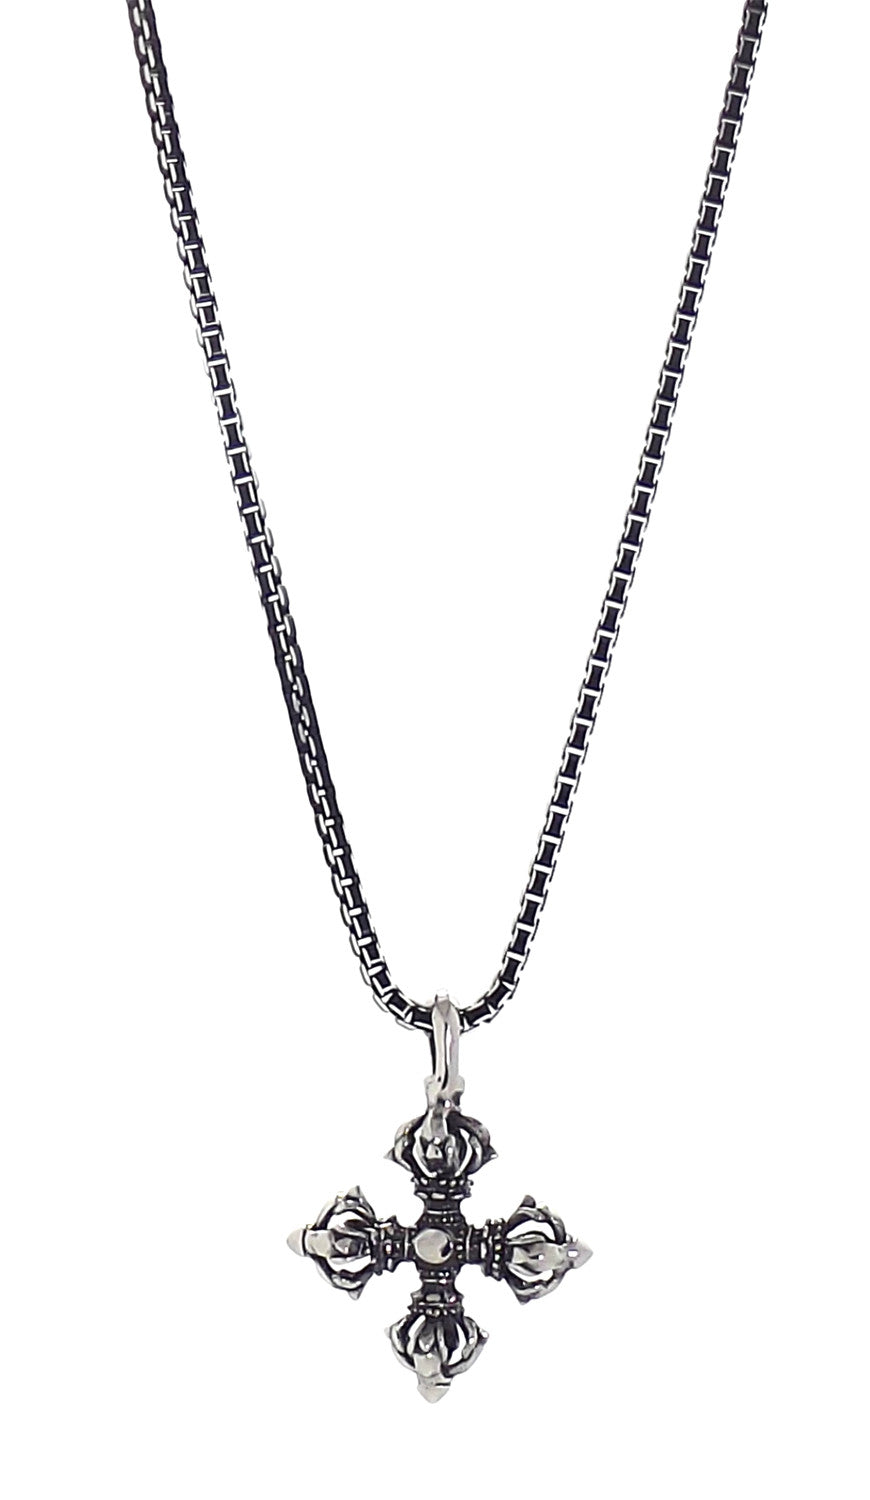 Necklace - Silver Vajra Star Necklace - Tossari
 - 3